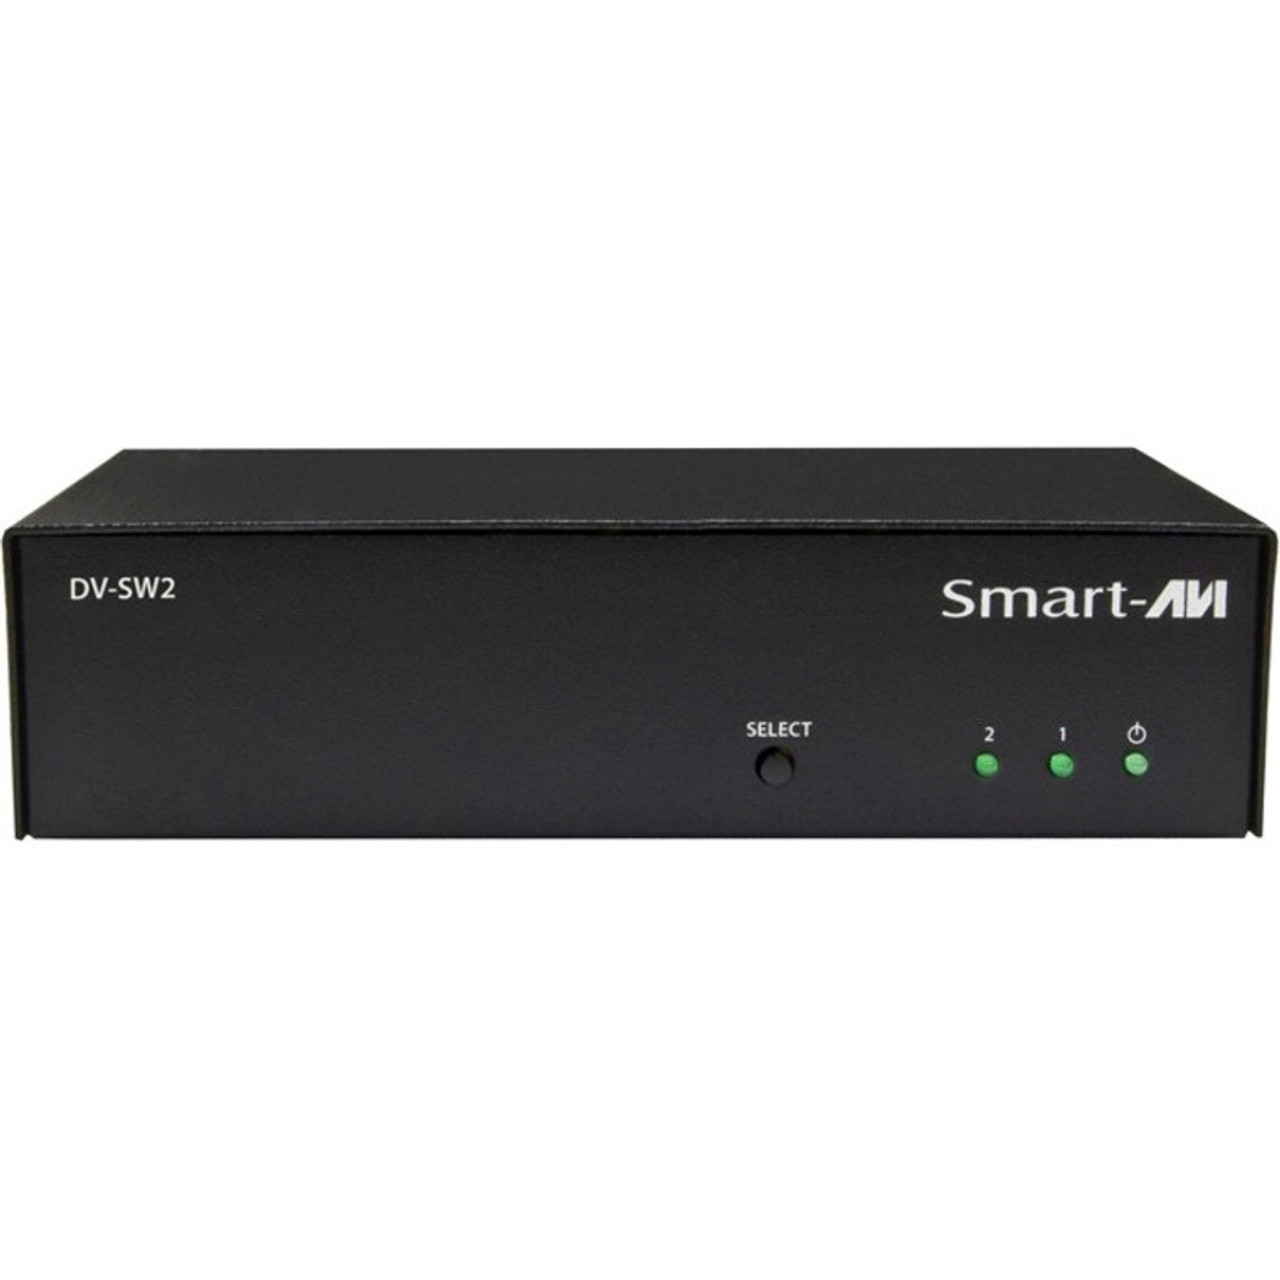 SmartAVI DVI-D 2x1 Switch with RS-232 Control - DV-SW2S